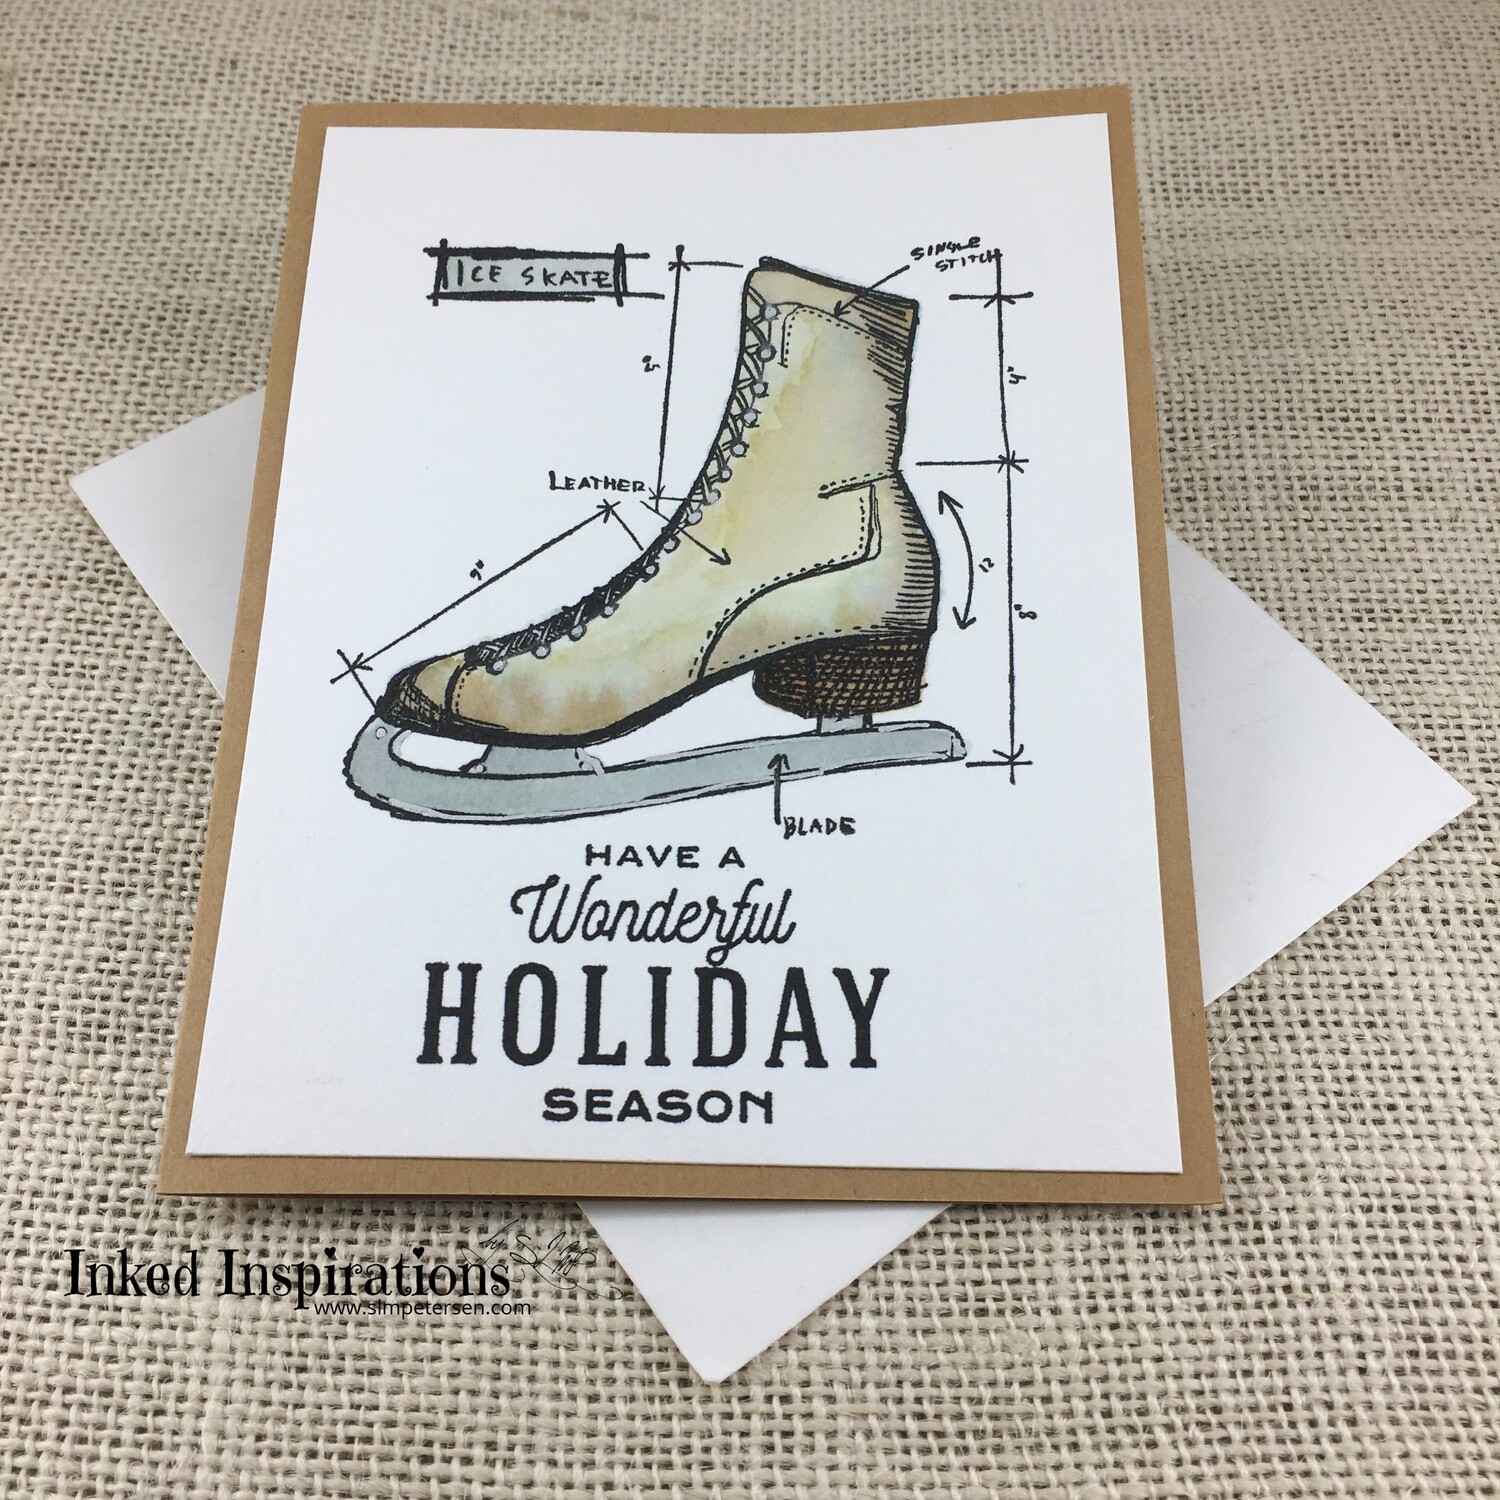 Have a Wonderful Holiday Season - Vintage Skate